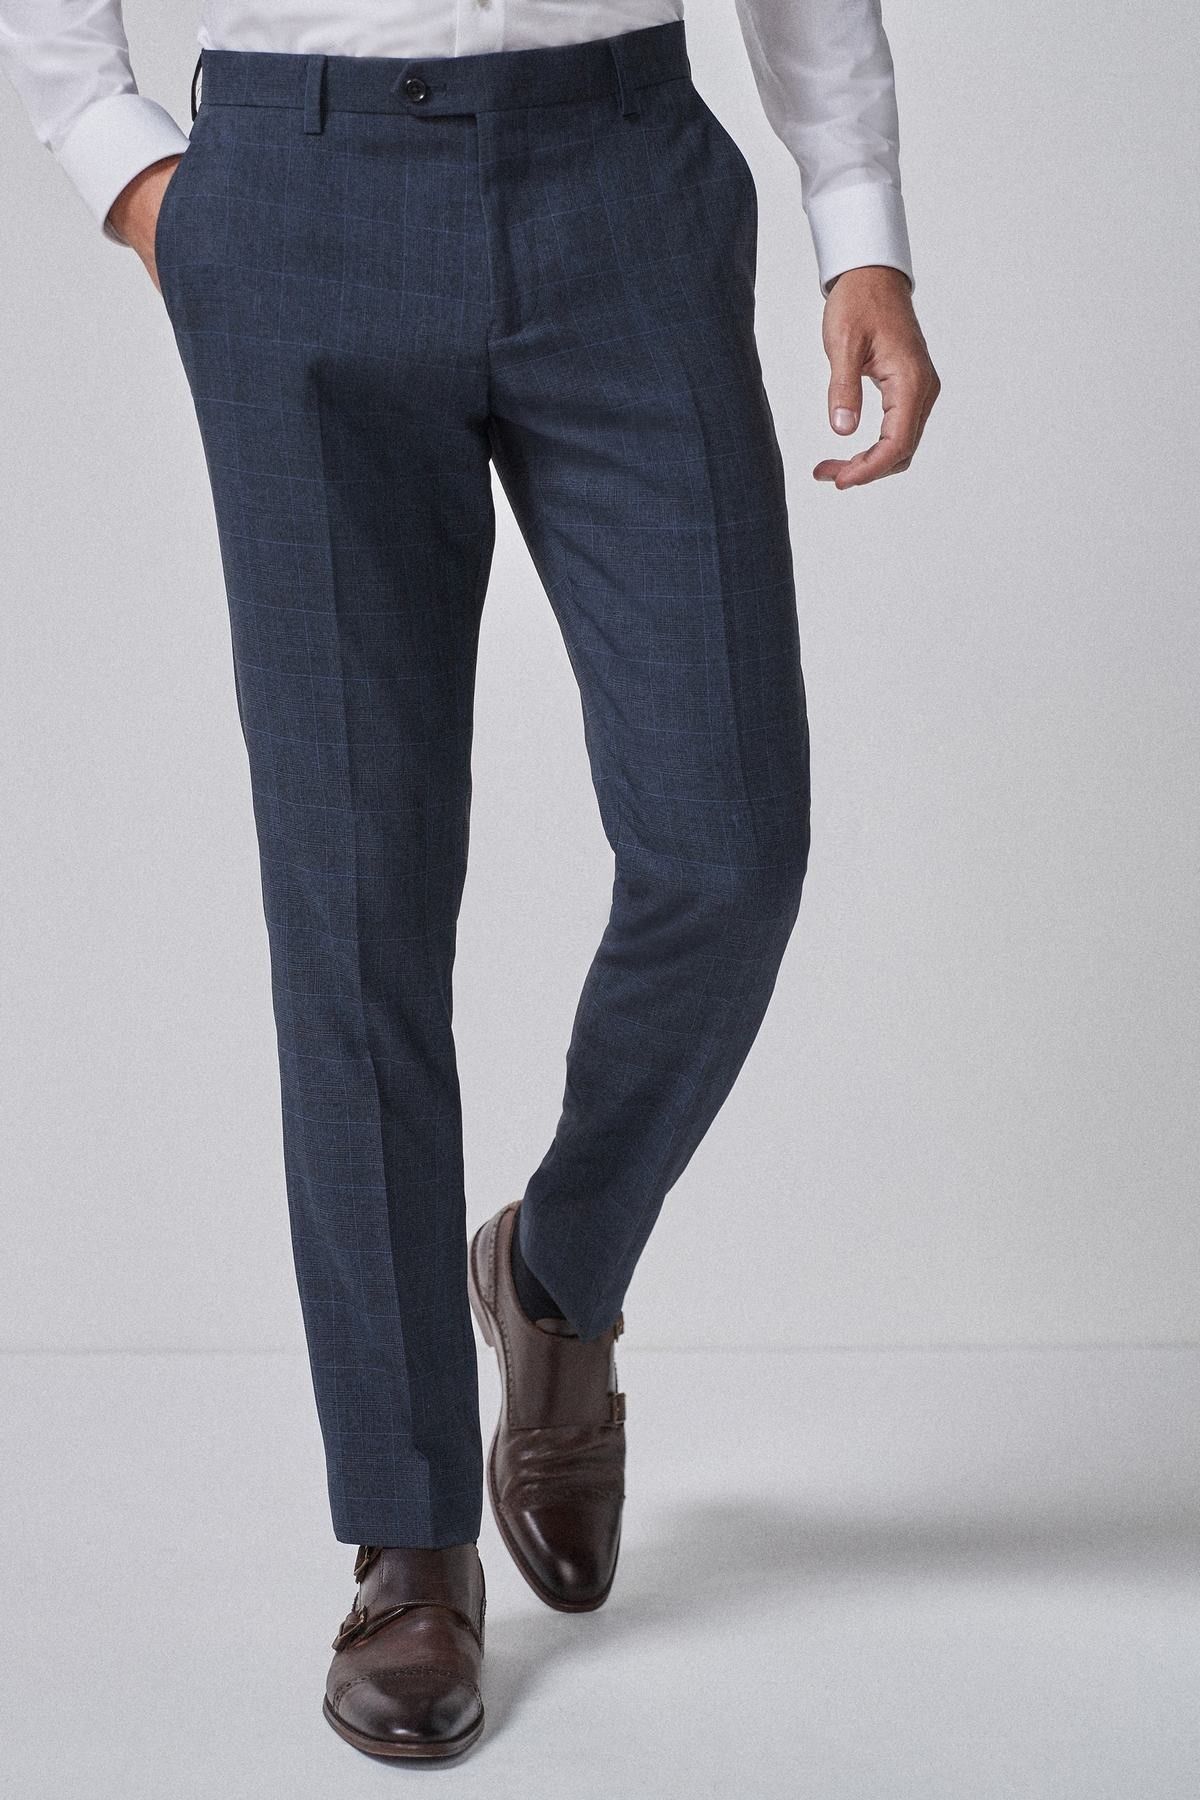 Buy Dark Grey Trousers  Pants for Women by Outryt Online  Ajiocom